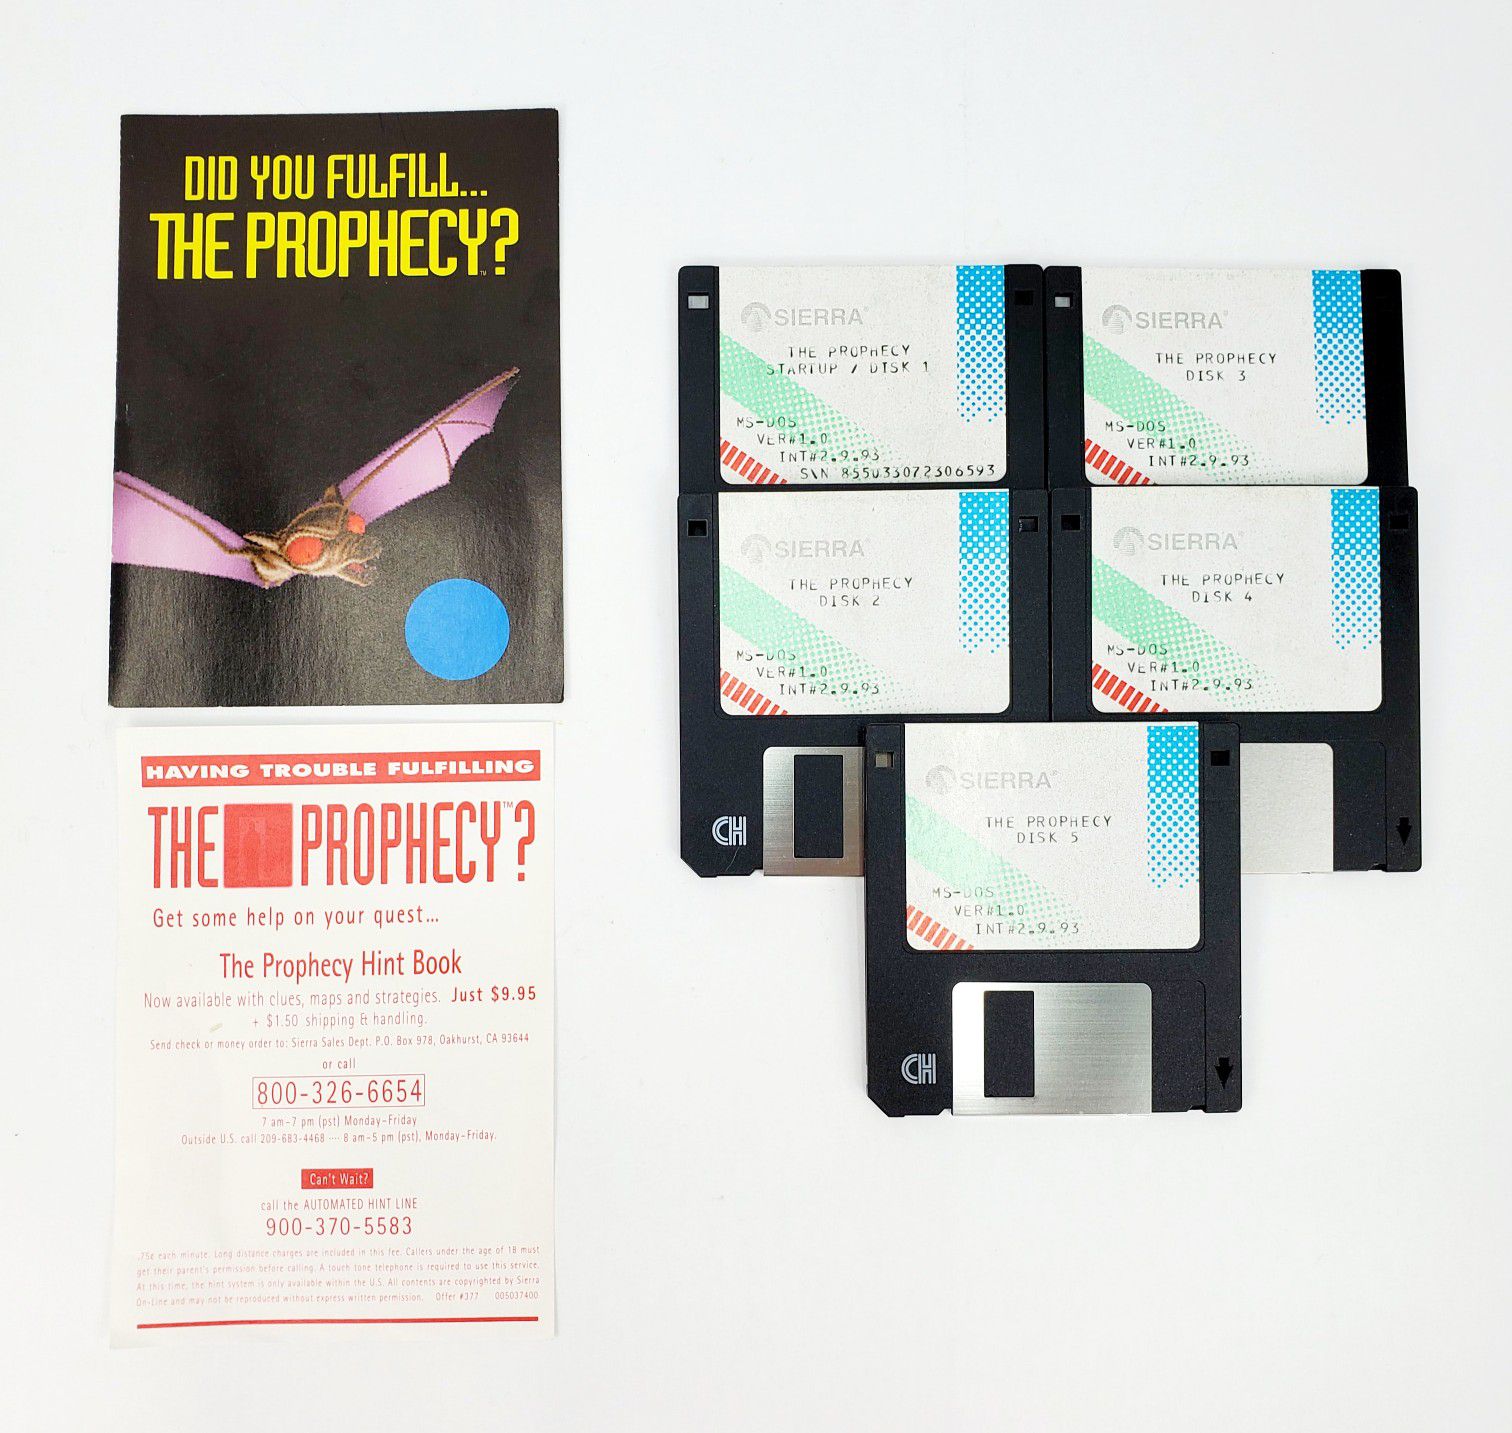 Sierra - The Prophecy - 5.25" Floppy Disks, Manual & Feelie - IBM PC Tandy